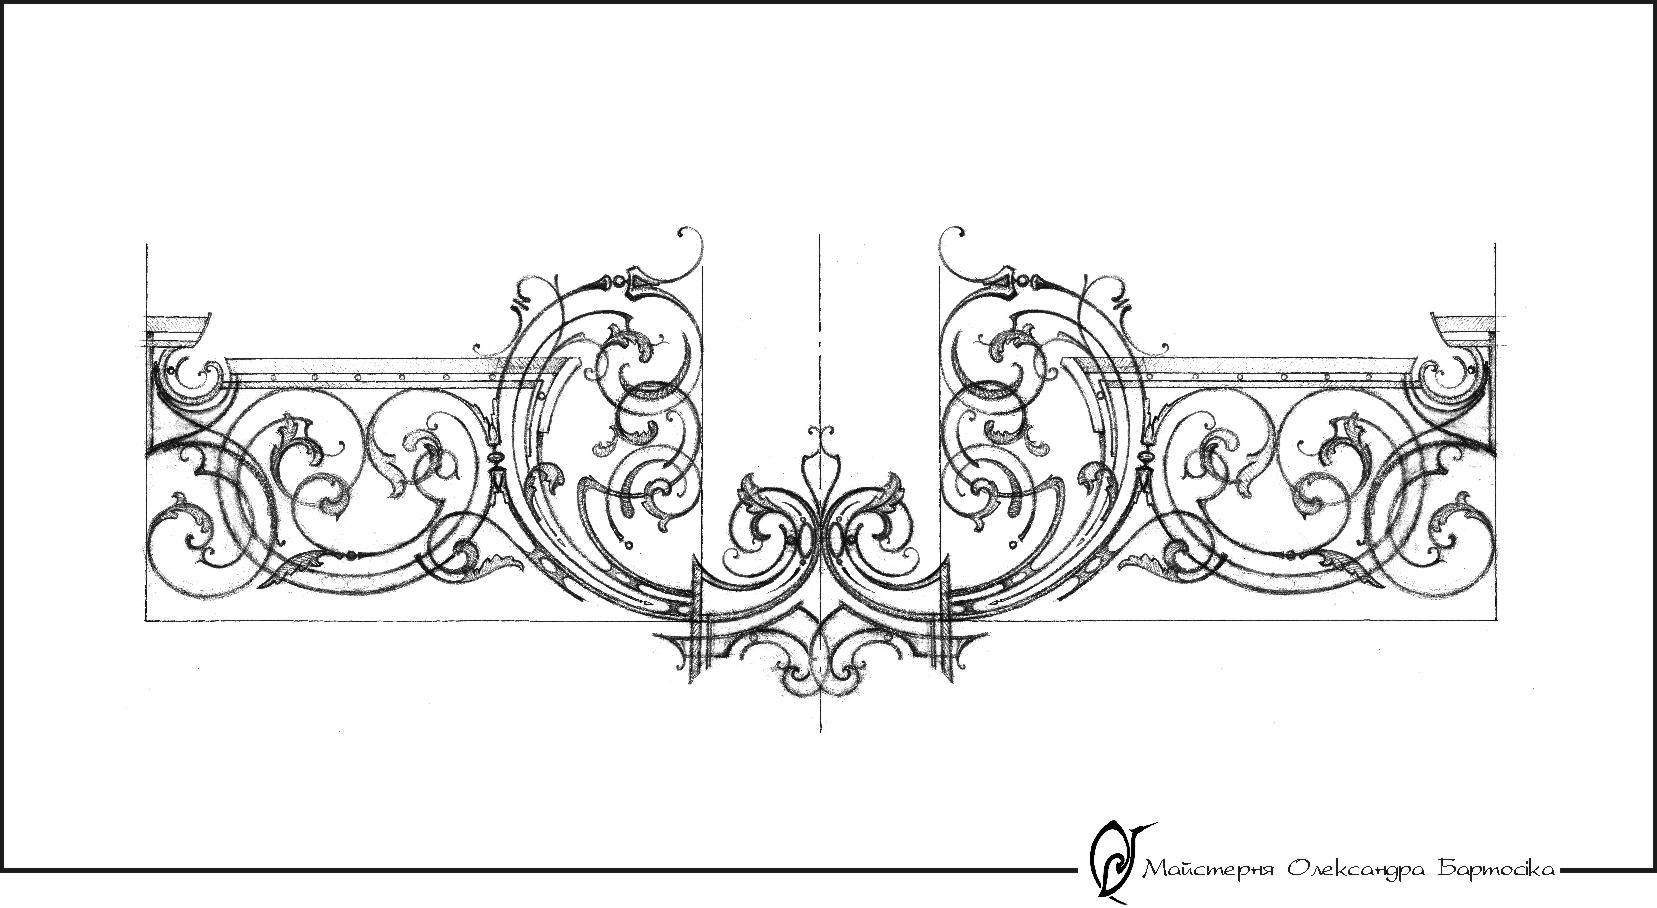 Kaleidoscope-Draft of railings